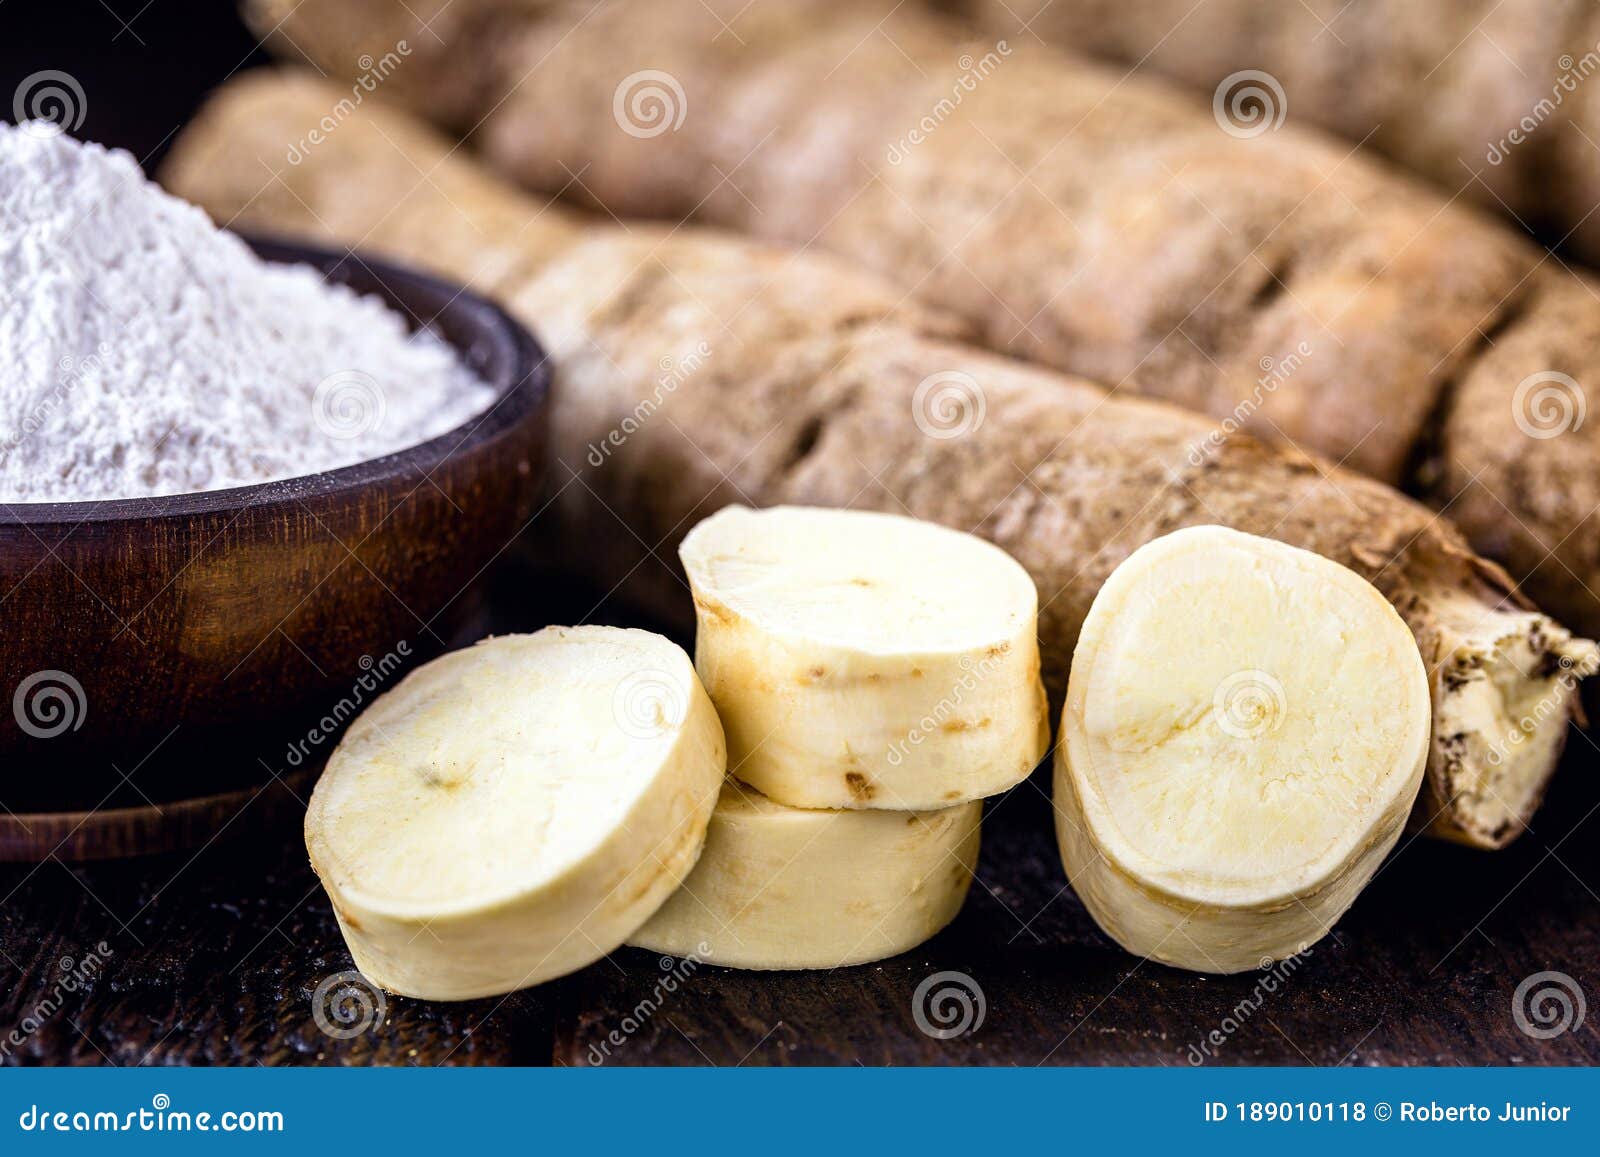 Brazilian Cassava Flour Called Polvilho Cassava Starch Carima Or Gum Is The Starch Of Cassava Stock Photo Image Of Manioc Mandioca 189010118,How Do Birds Mate Slow Motion